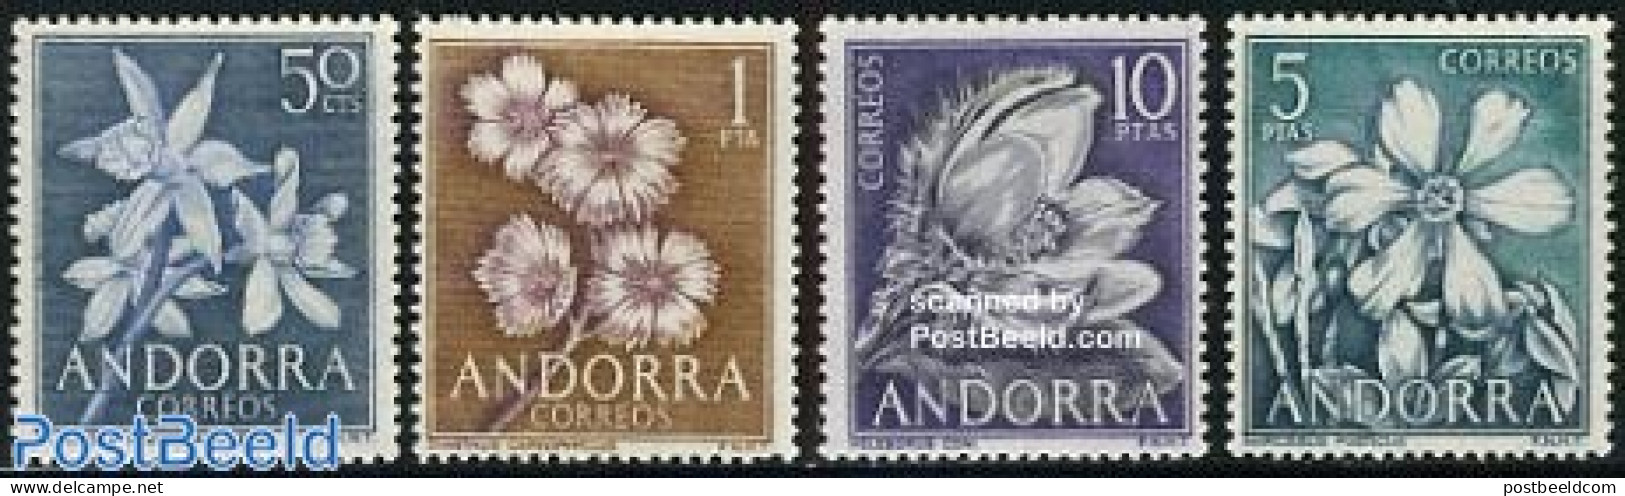 Andorra, Spanish Post 1966 Definitives, Flowers 4v, Mint NH, Nature - Flowers & Plants - Neufs